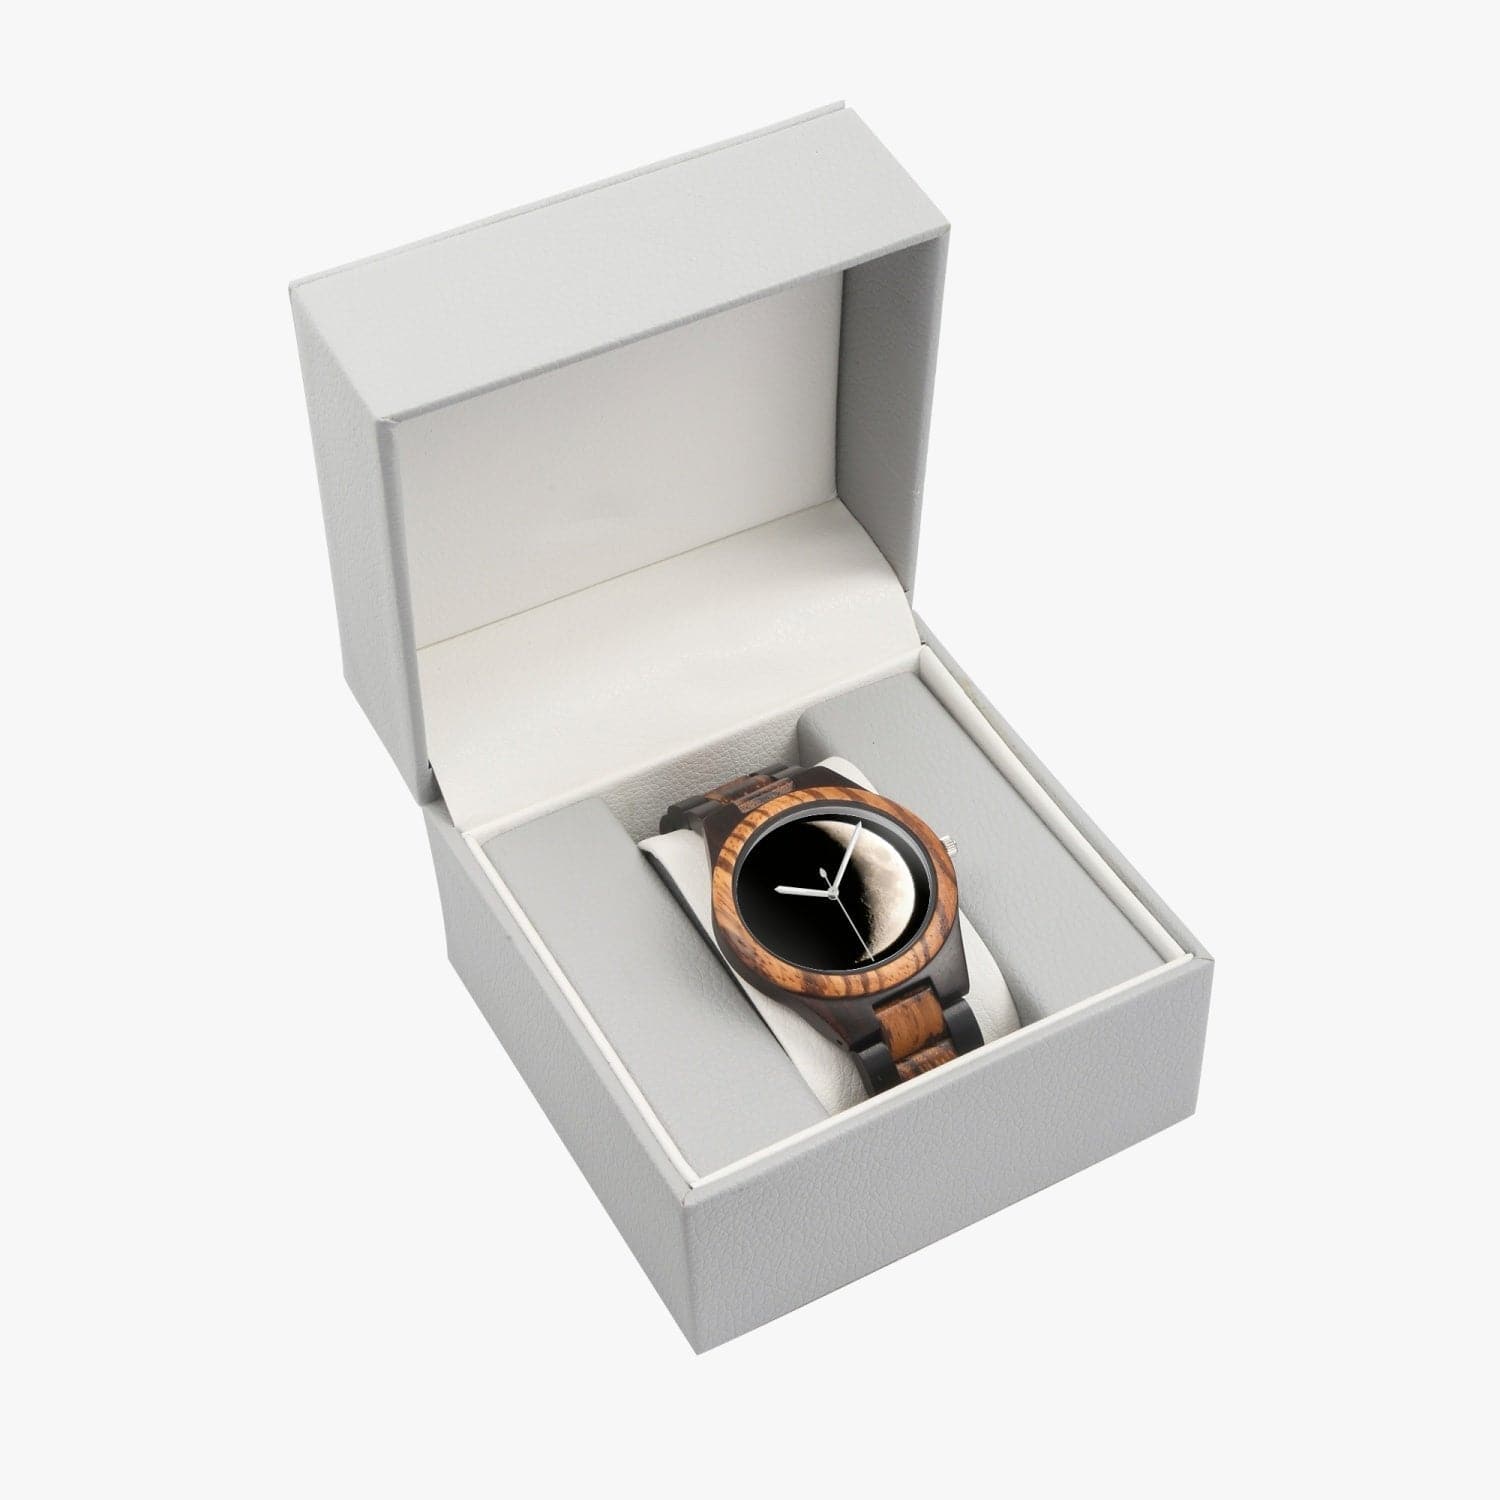 New Moon.  Ebony Wooden Watch. Designer watch by Sensus Studio Design